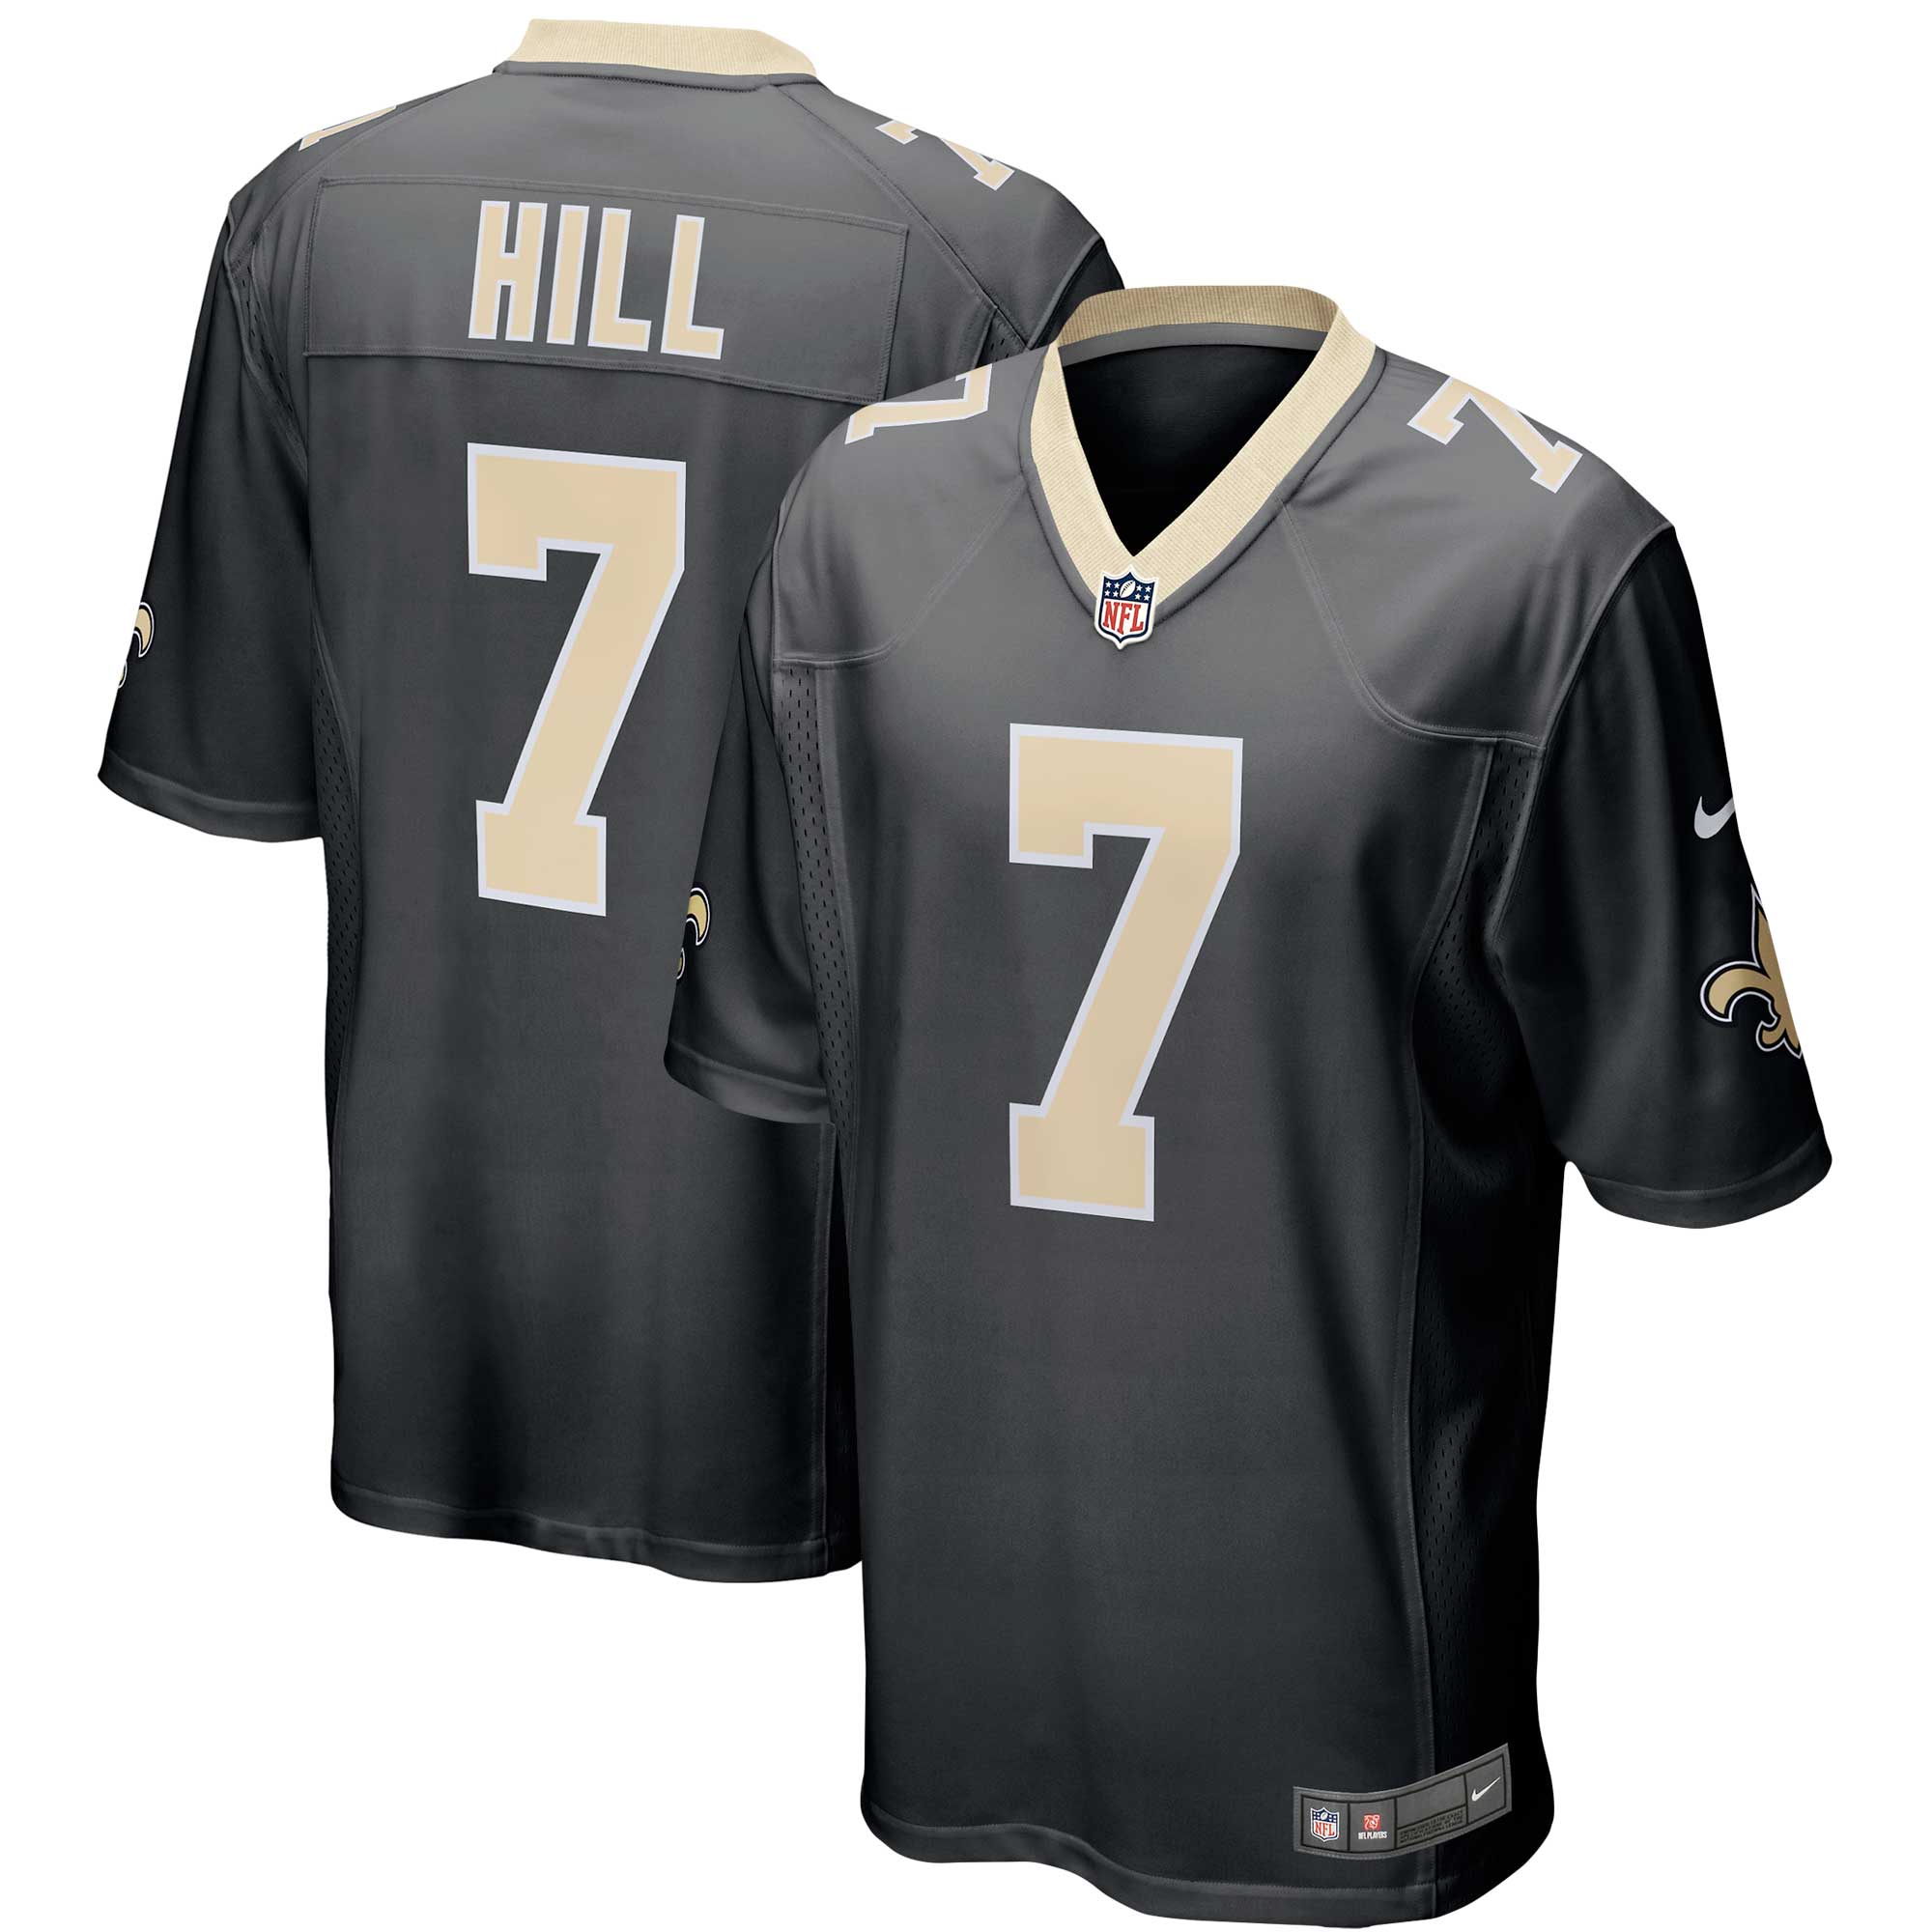 Men's New Orleans Saints Taysom Hill Nike Black Game Player Jersey